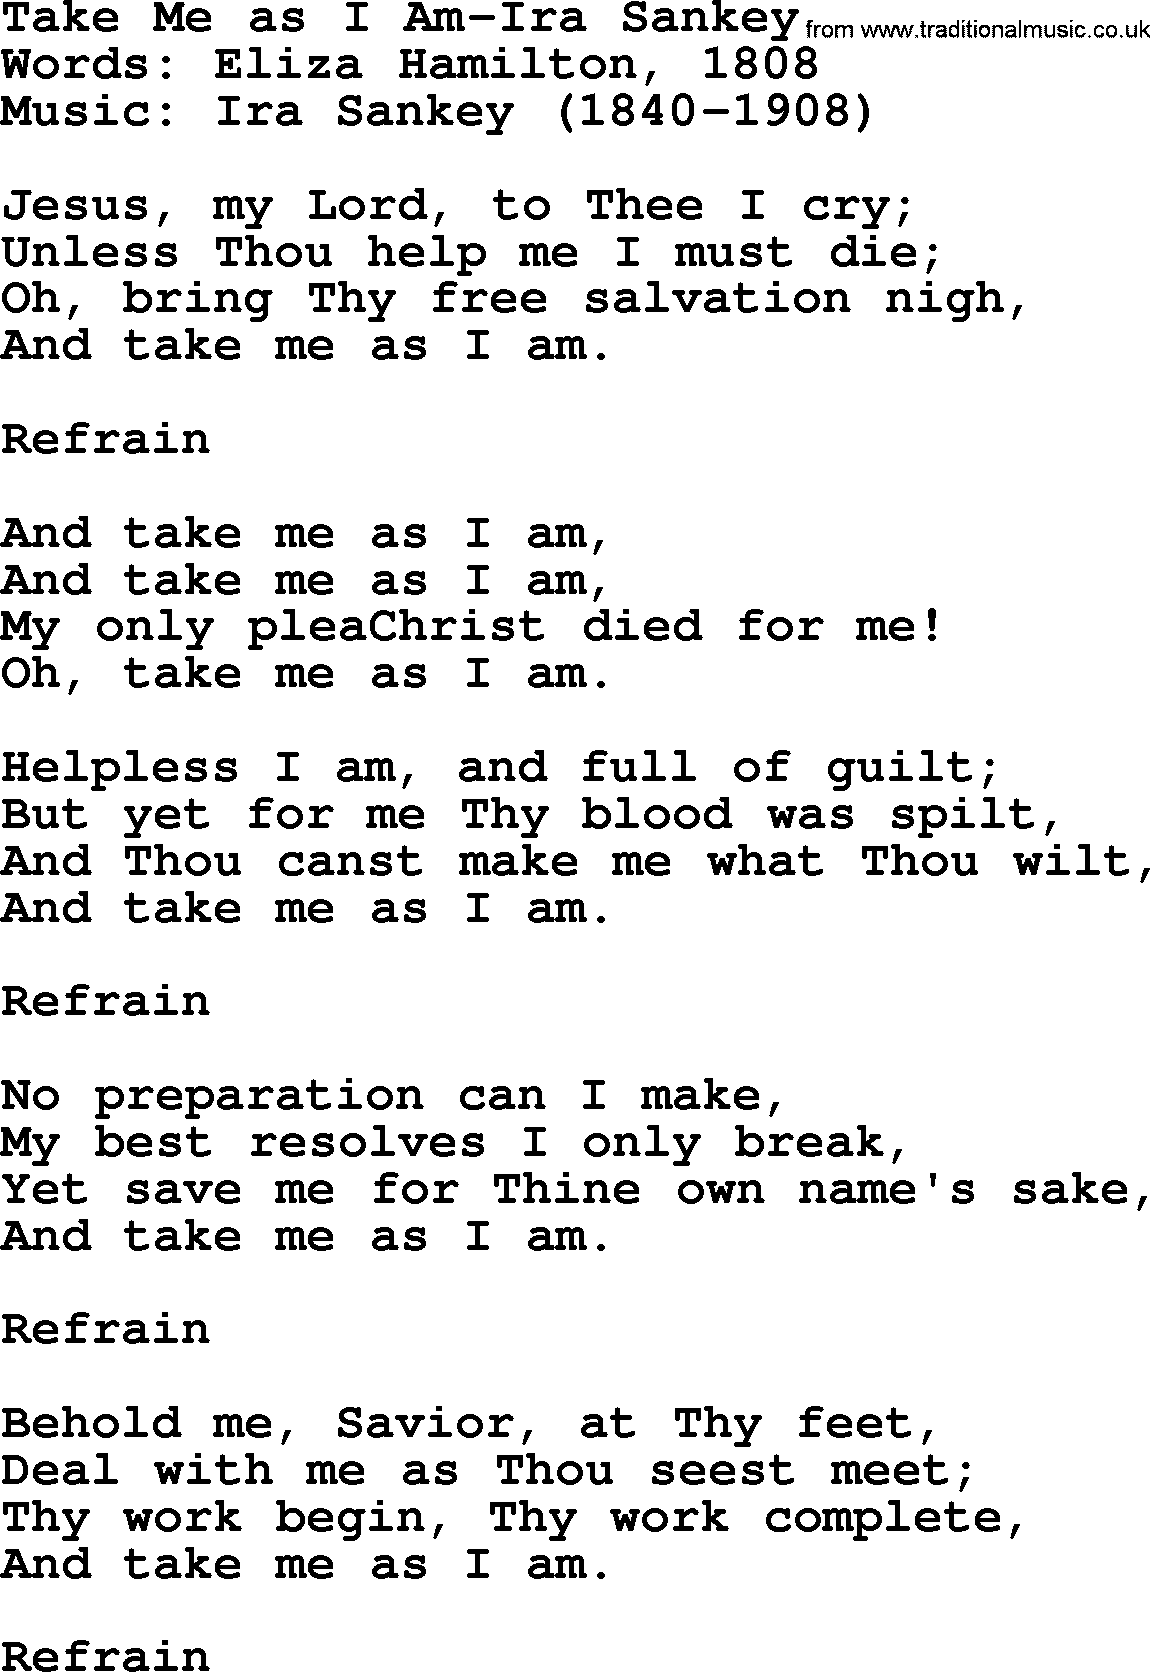 Ira Sankey hymn: Take Me as I Am-Ira Sankey, lyrics